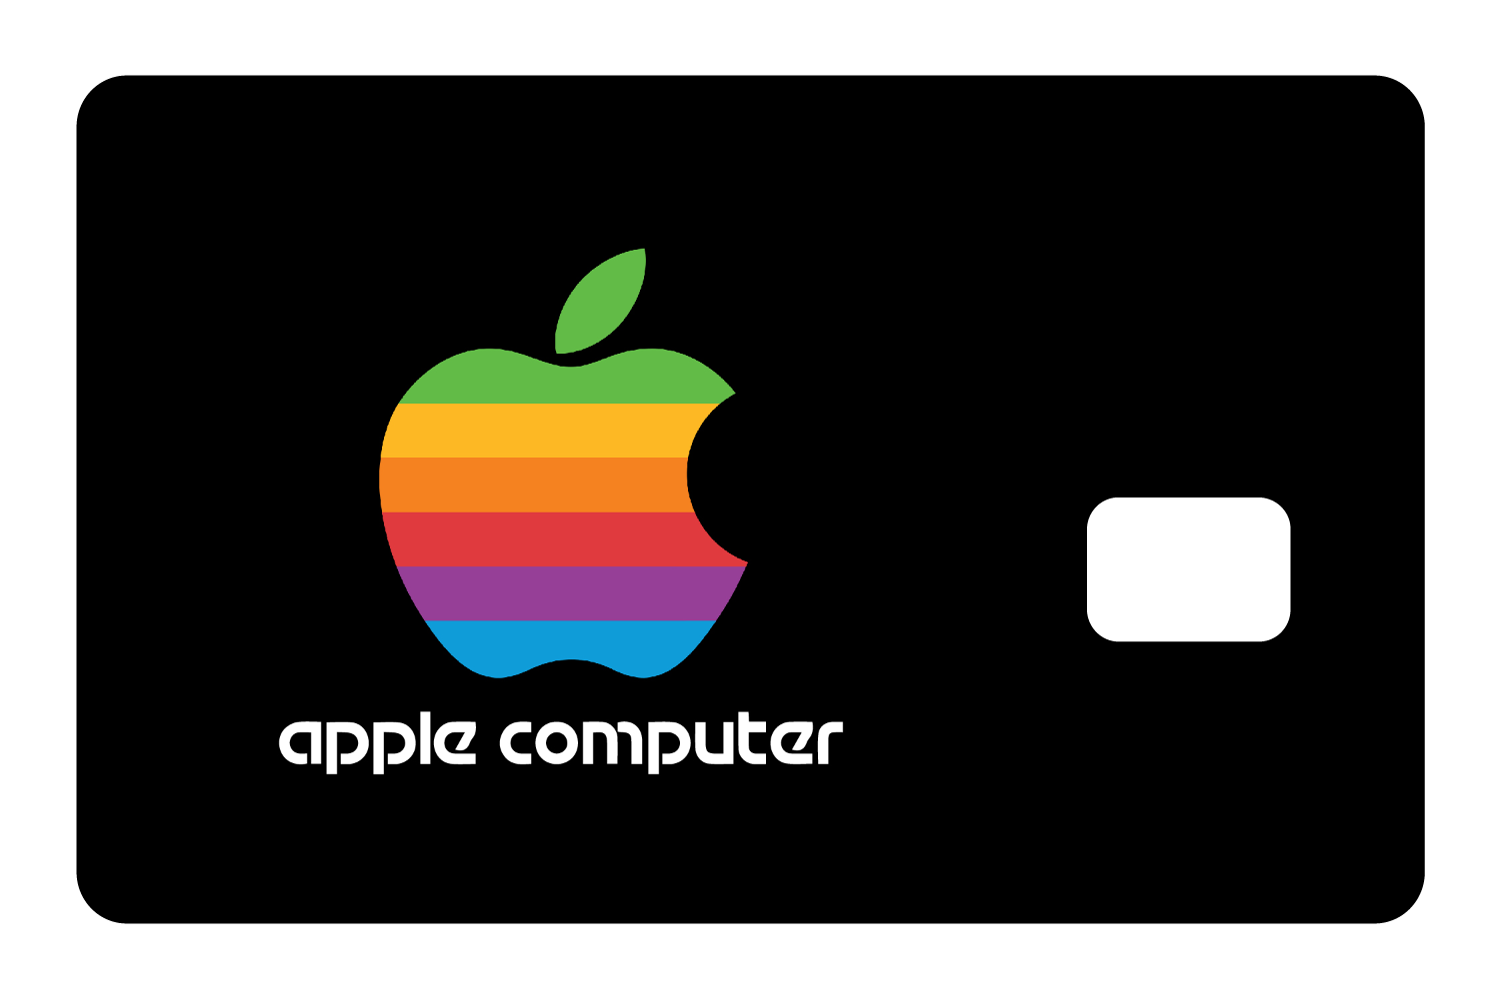 Apple Computer: Black